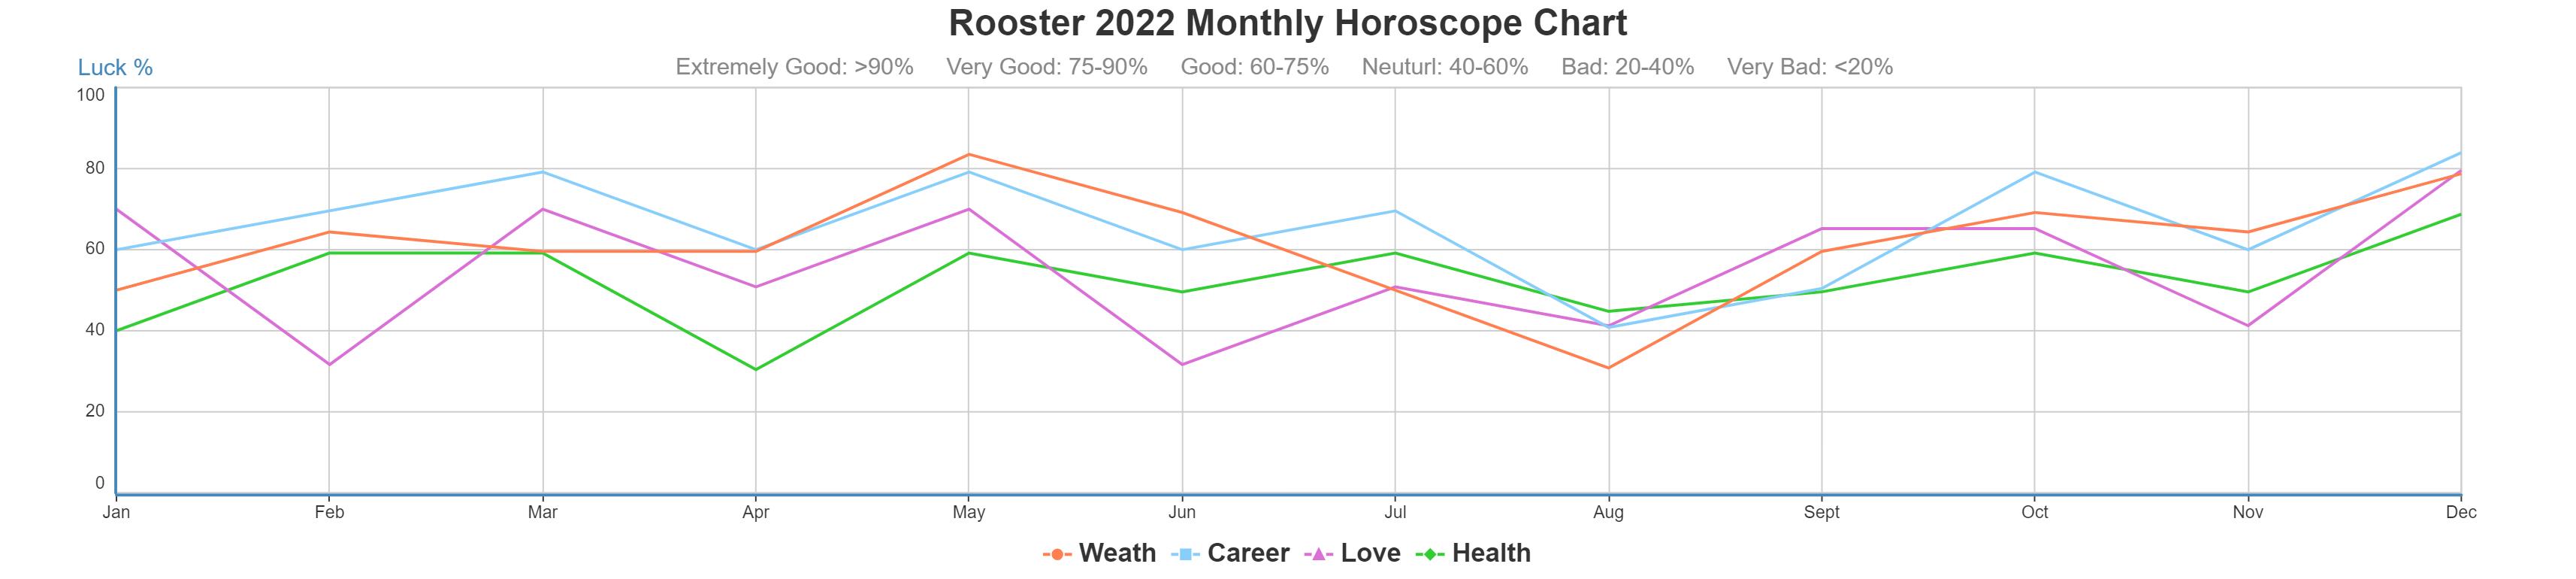 Rooster horoscope 2022